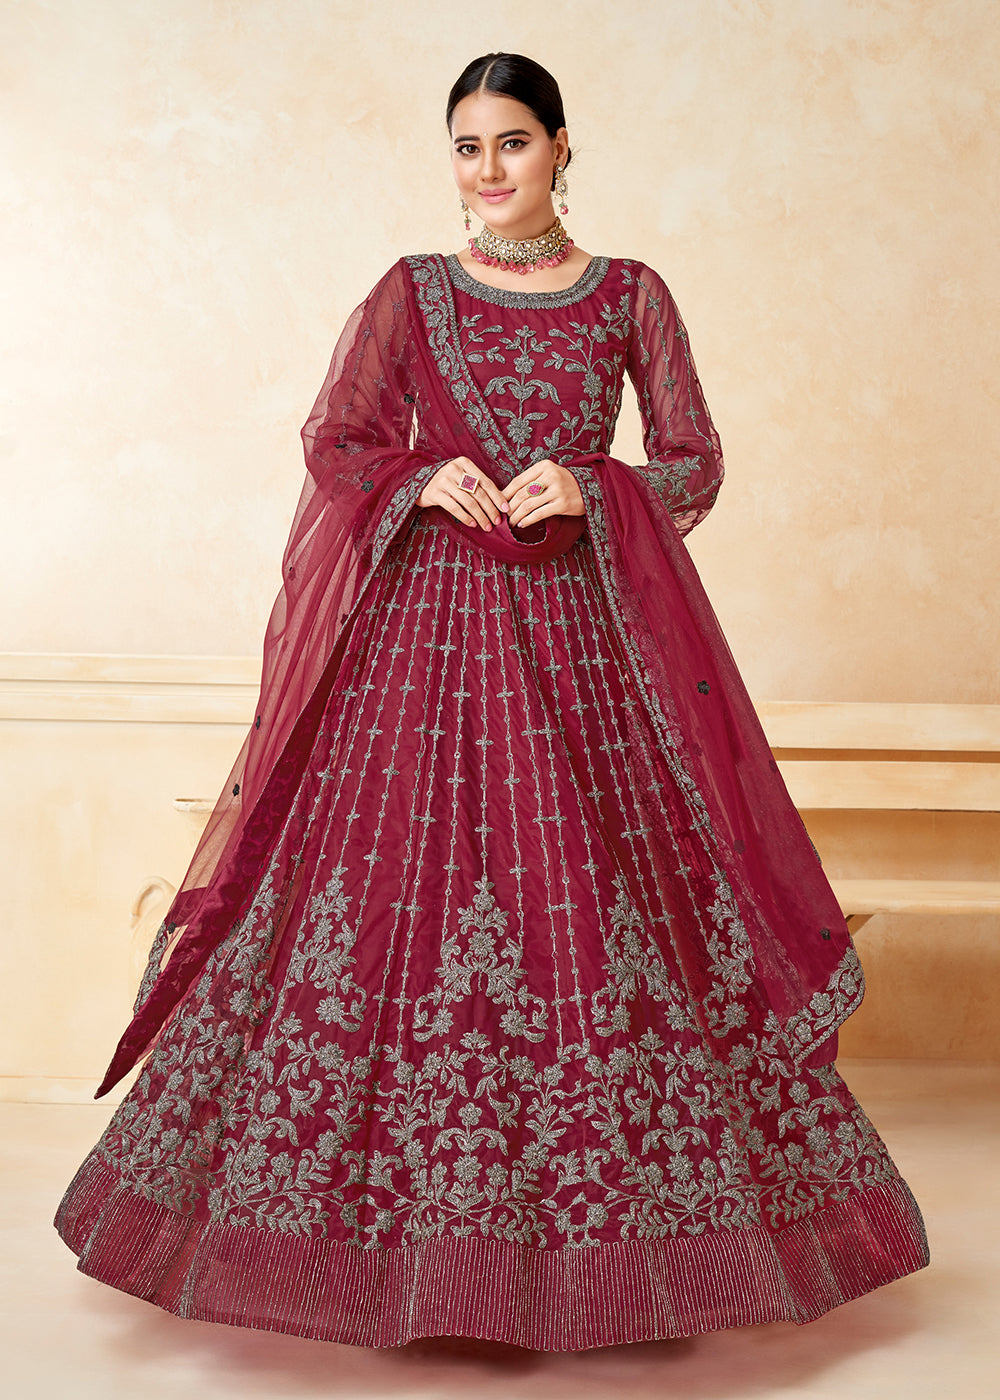 Buy Now Elegant Maroon Net Wedding Wear Anarkali Dress Online in USA, UK, Australia, New Zealand, Canada & Worldwide at Empress Clothing.